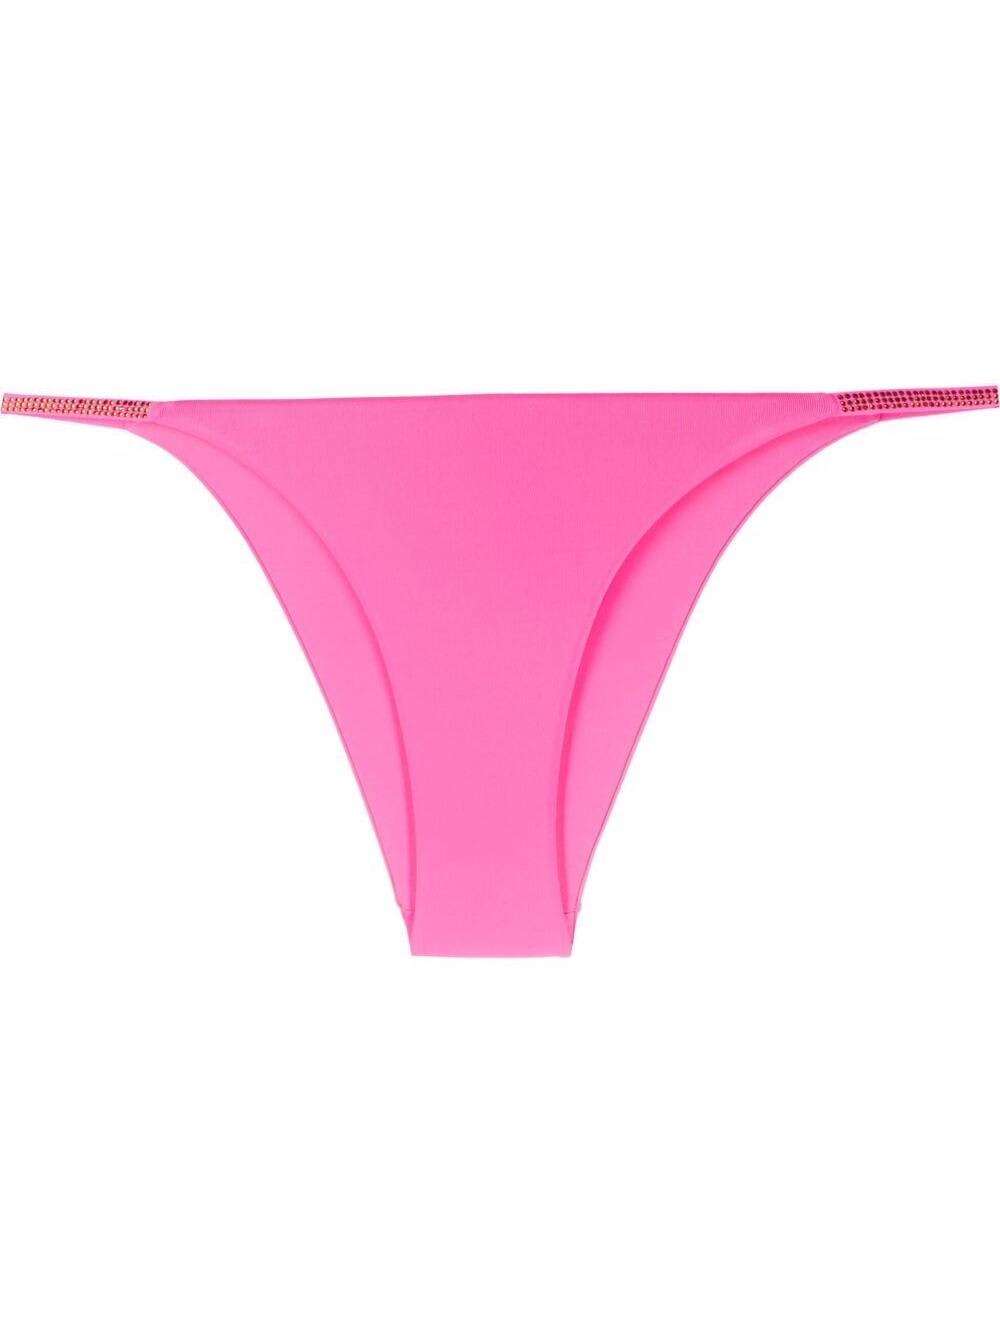 Fisico - Cristina Ferrari Fisico Womans Pink Bikini Bottom With Glitter Details